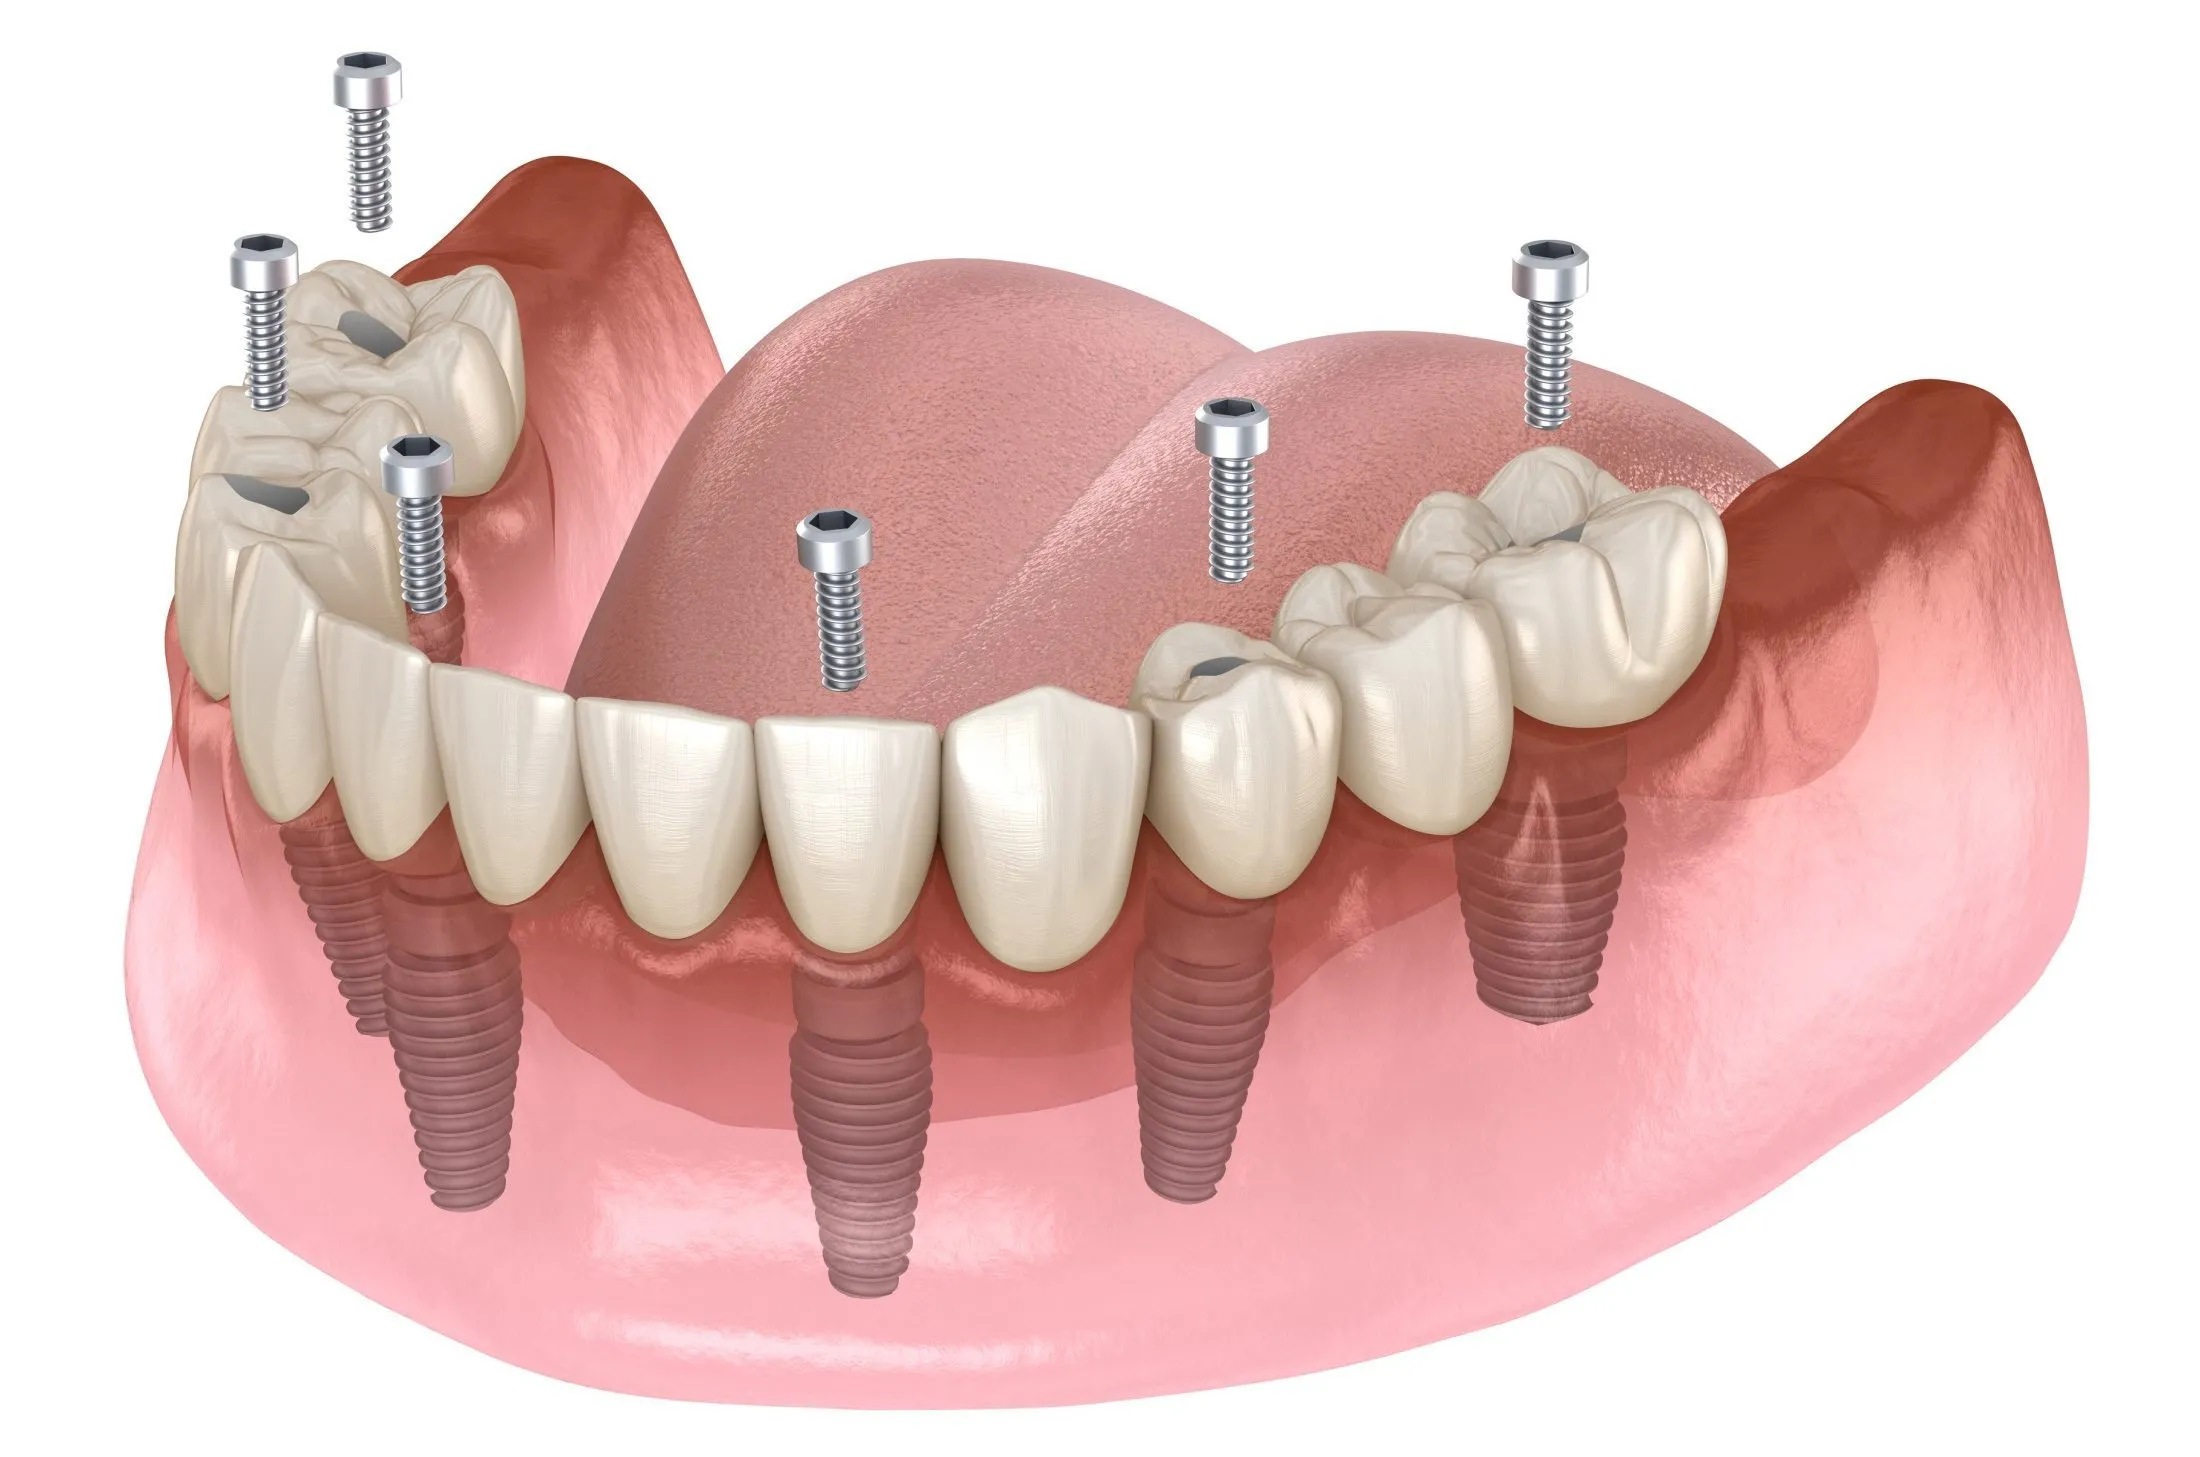 permanent dentures illustration